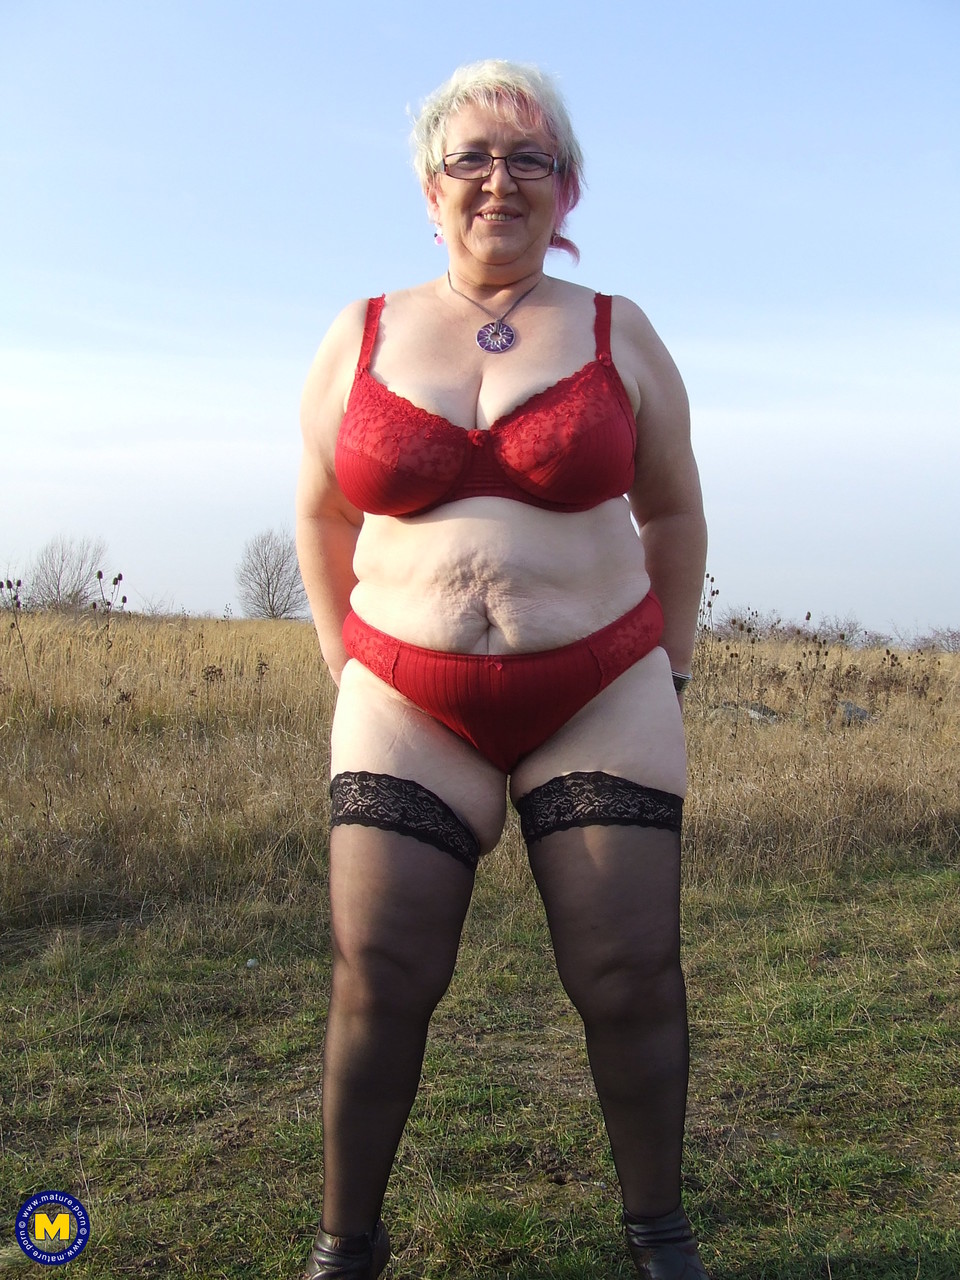 Wild granny with huge saggy tits Silke poses in lingerie & masturbates outside porno fotky #422616209 | Mature NL Pics, Silke, Granny, mobilní porno